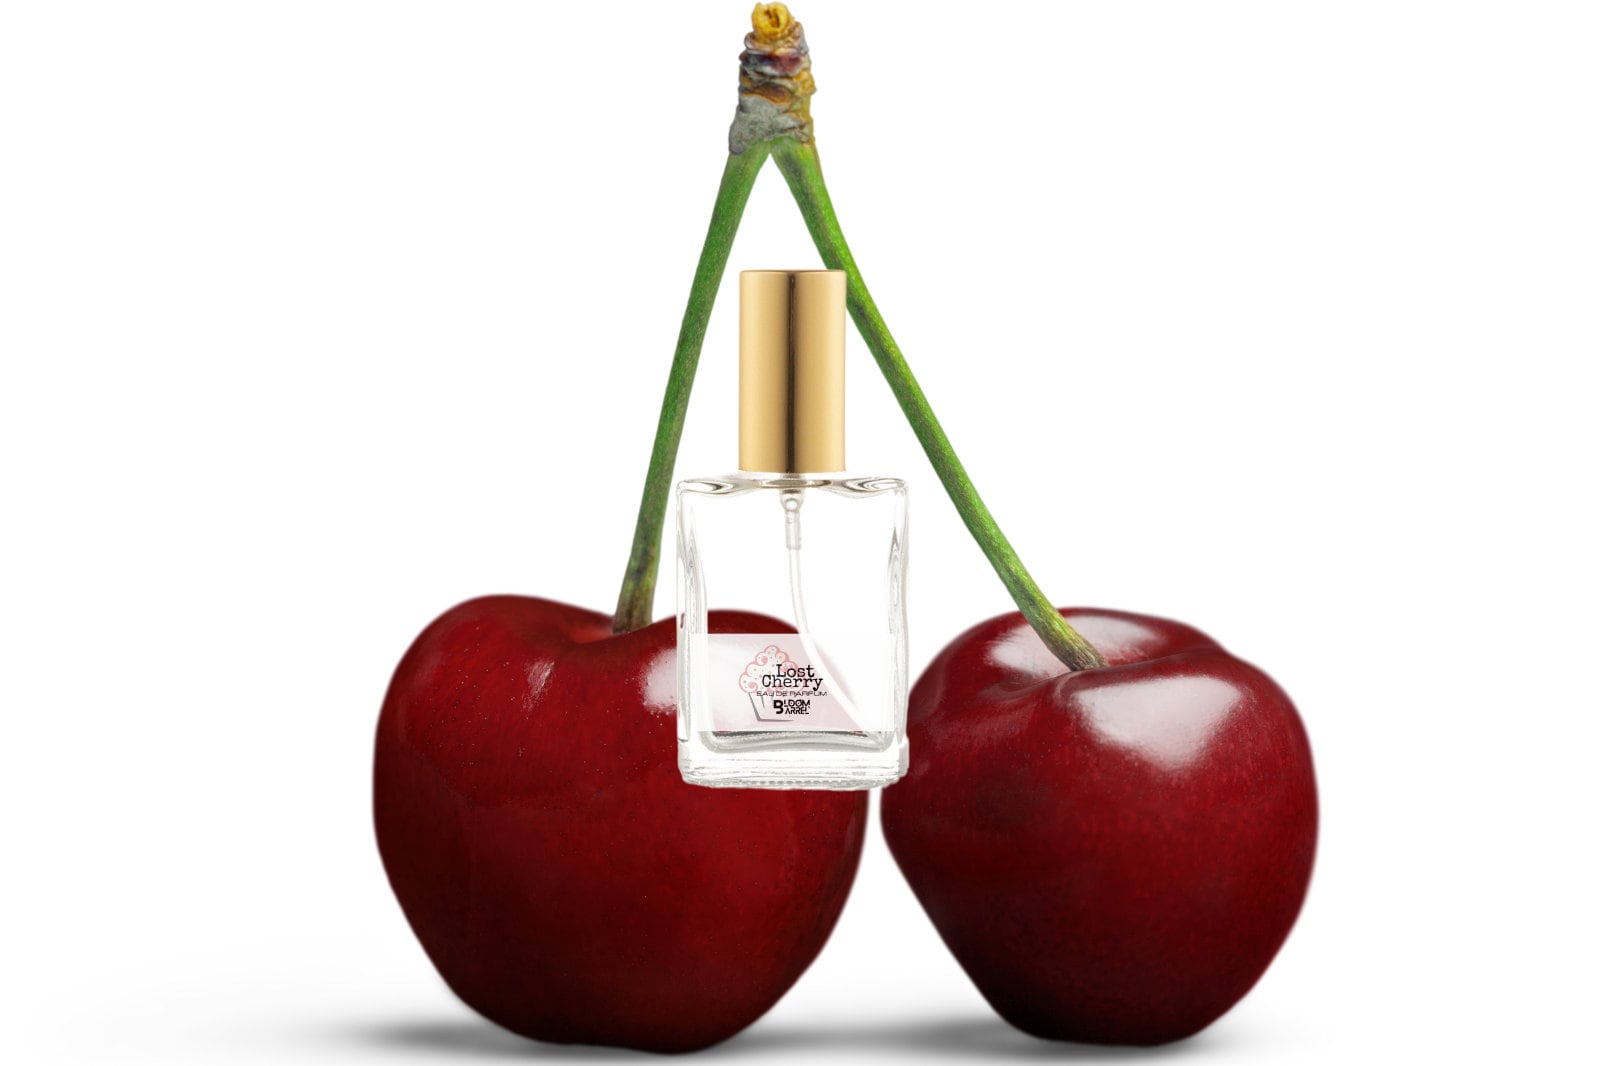 Lost Cherry Perfume, Perfume Oil, Eau de Perfume, Tom Ford